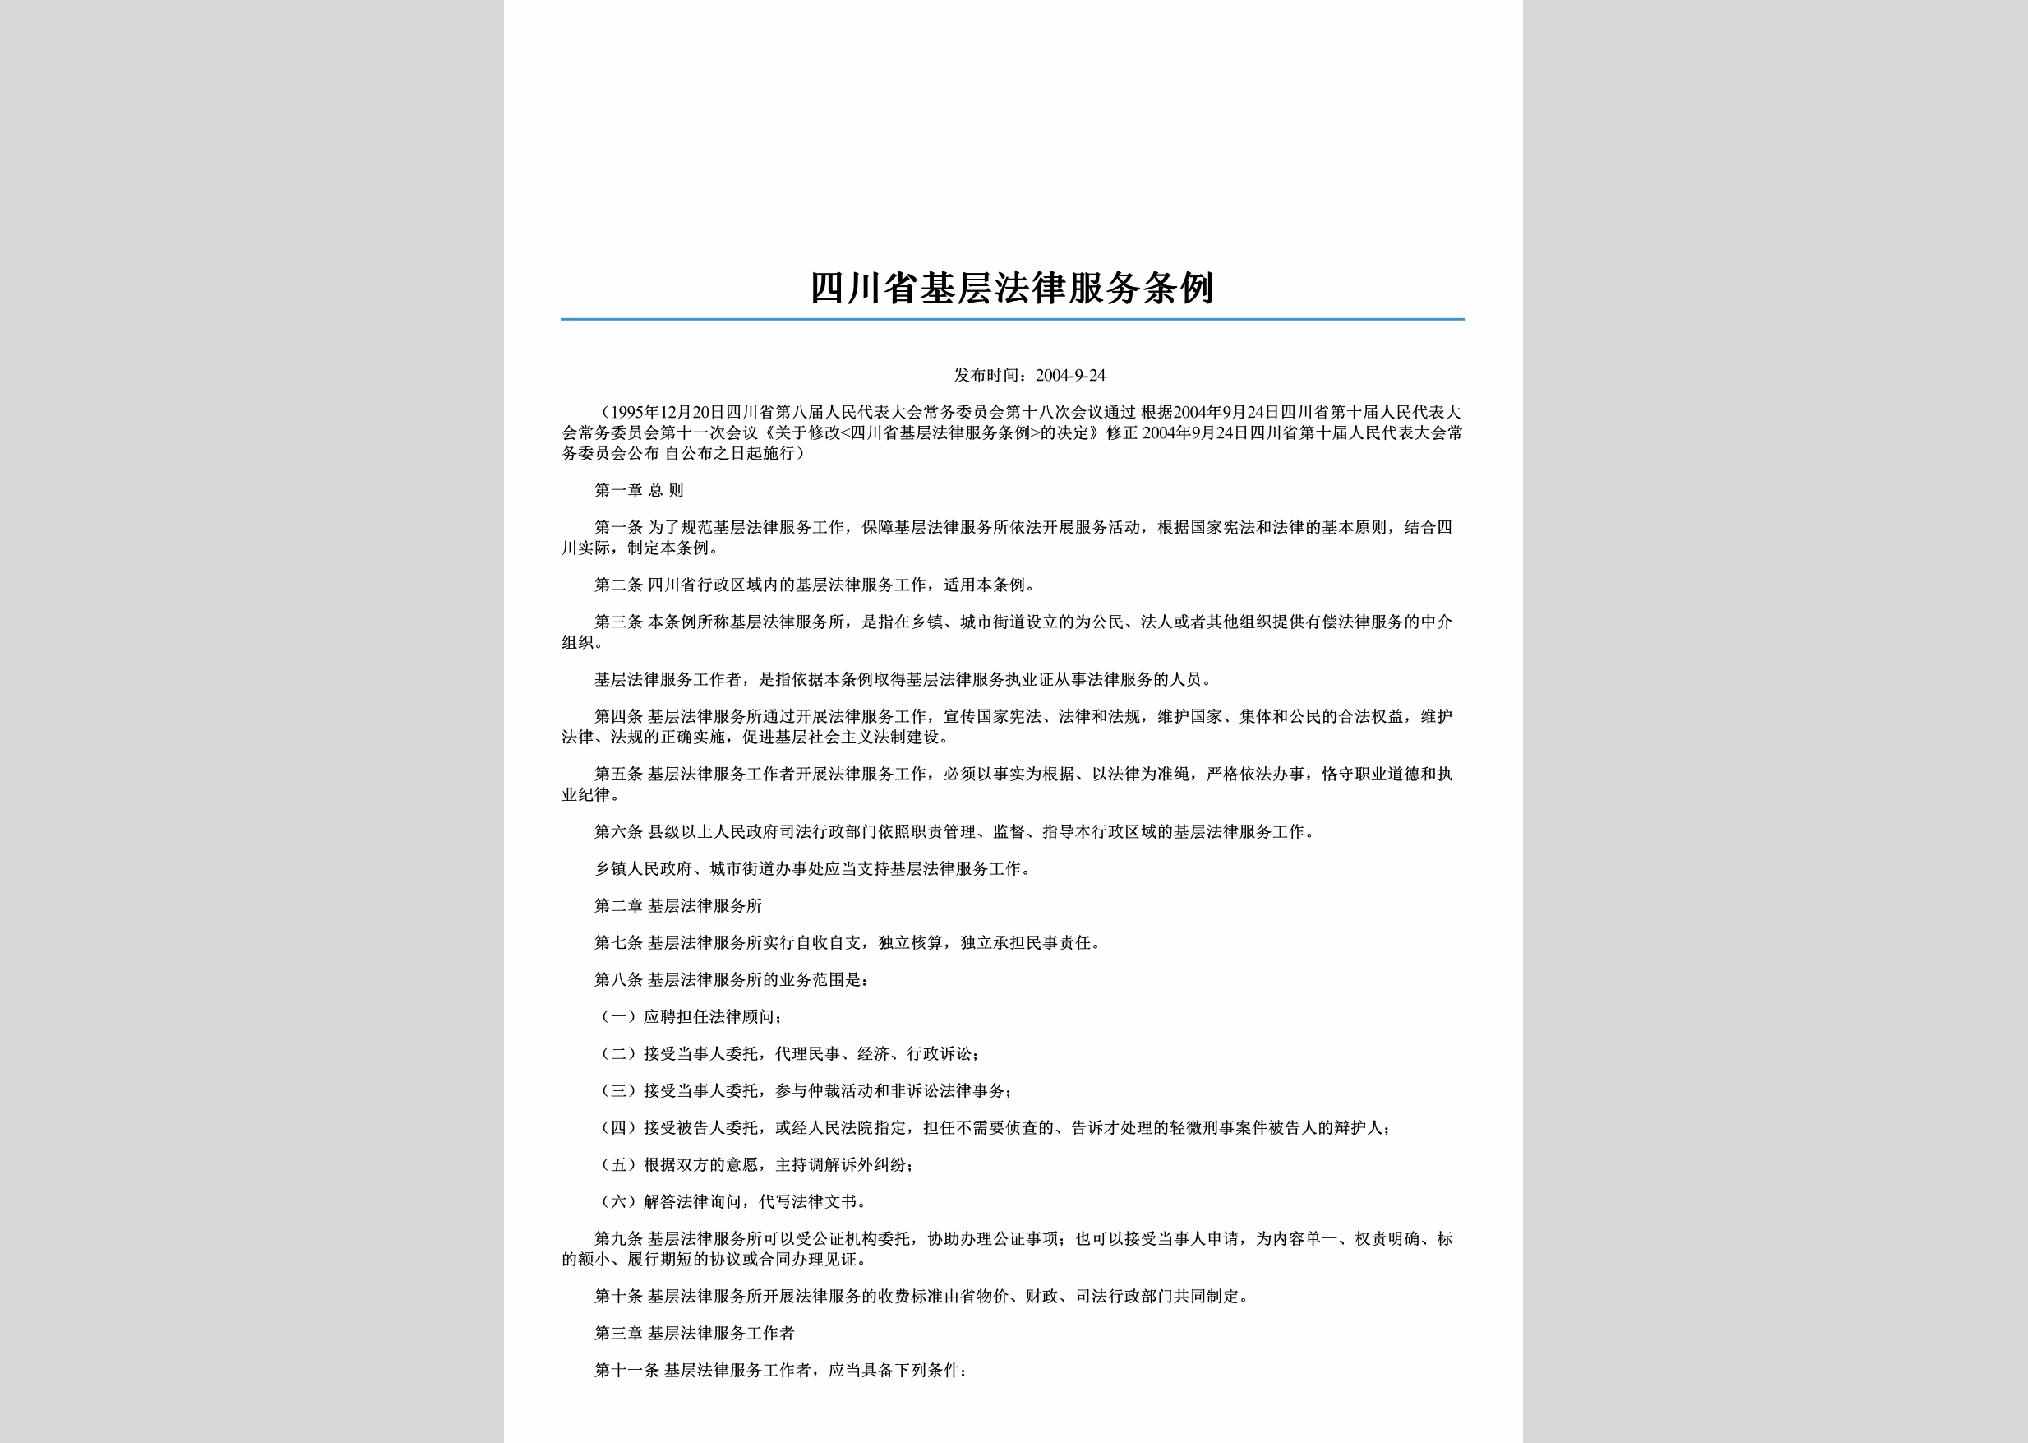 SC-JCFLFWTL-2006：四川省基层法律服务条例